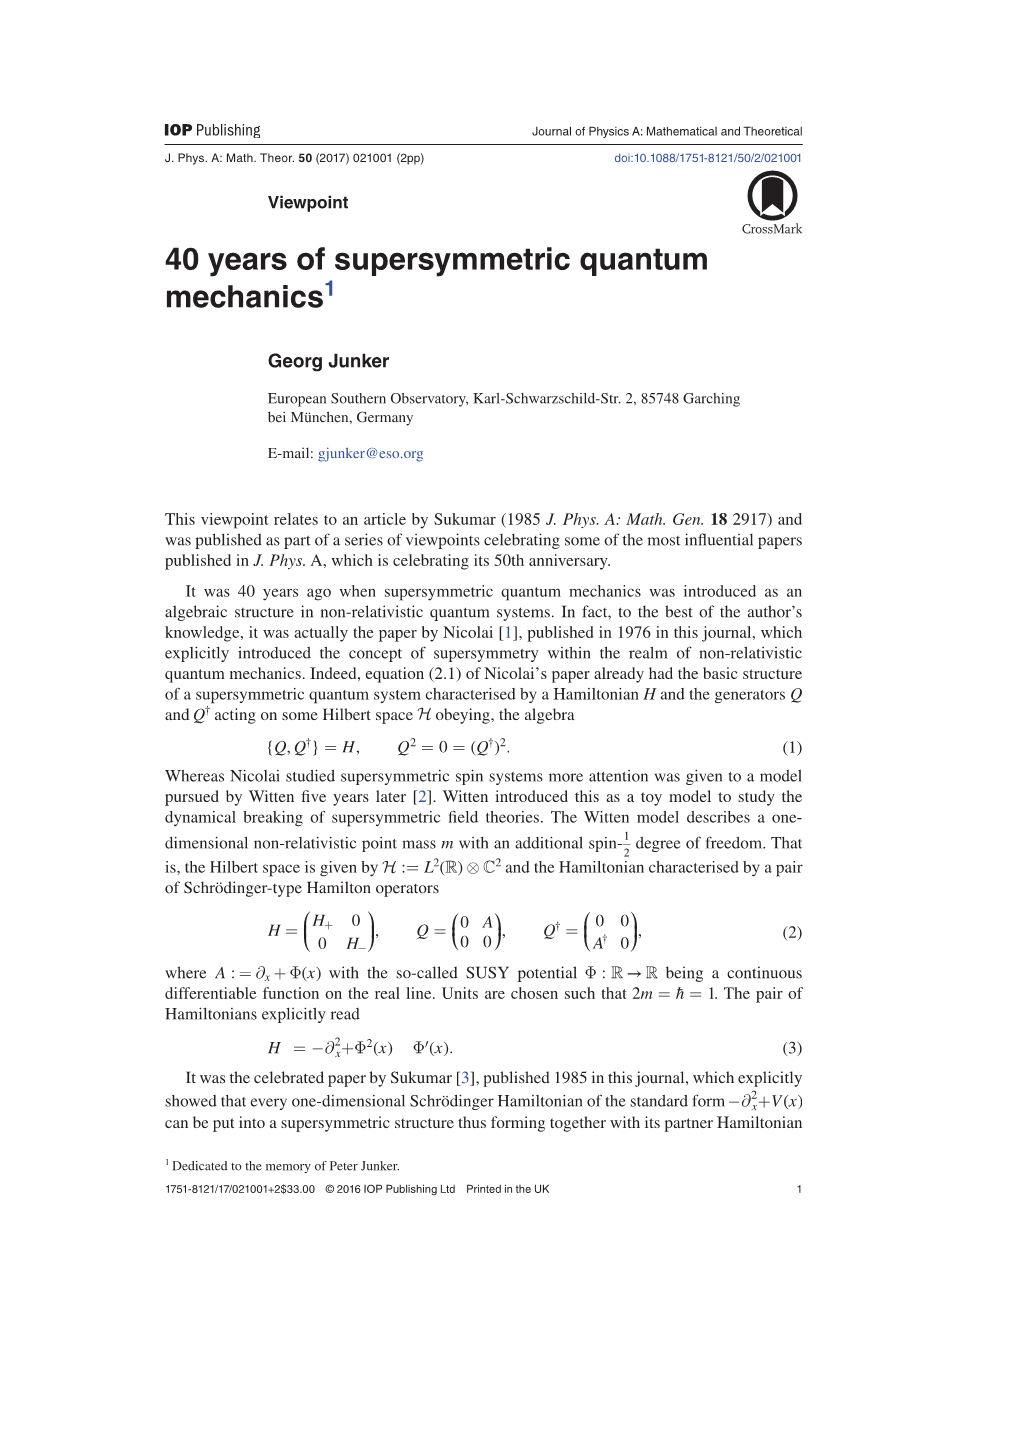 40 Years of Supersymmetric Quantum Mechanics 1